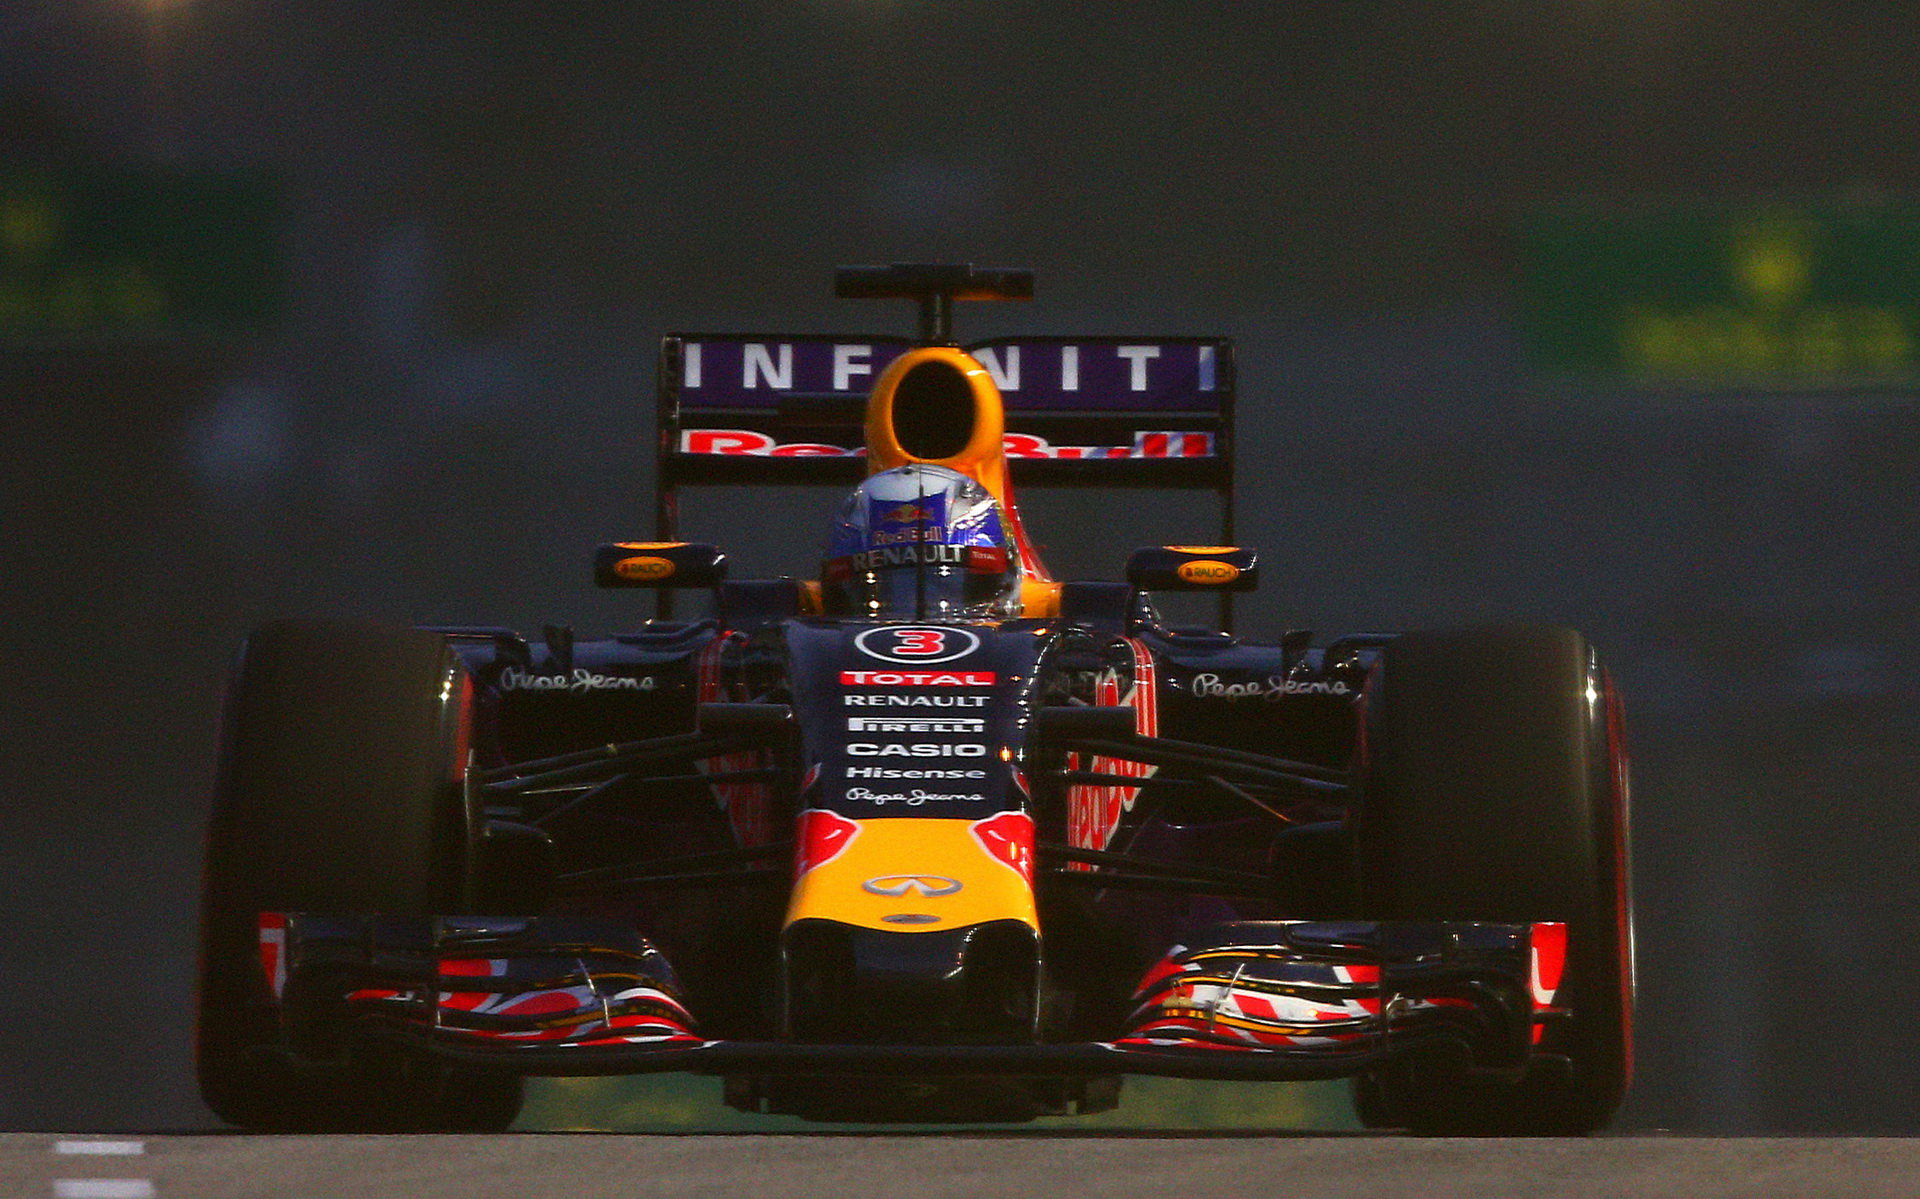 Daniel Ricciardo, GP Singapuru (Singapur)